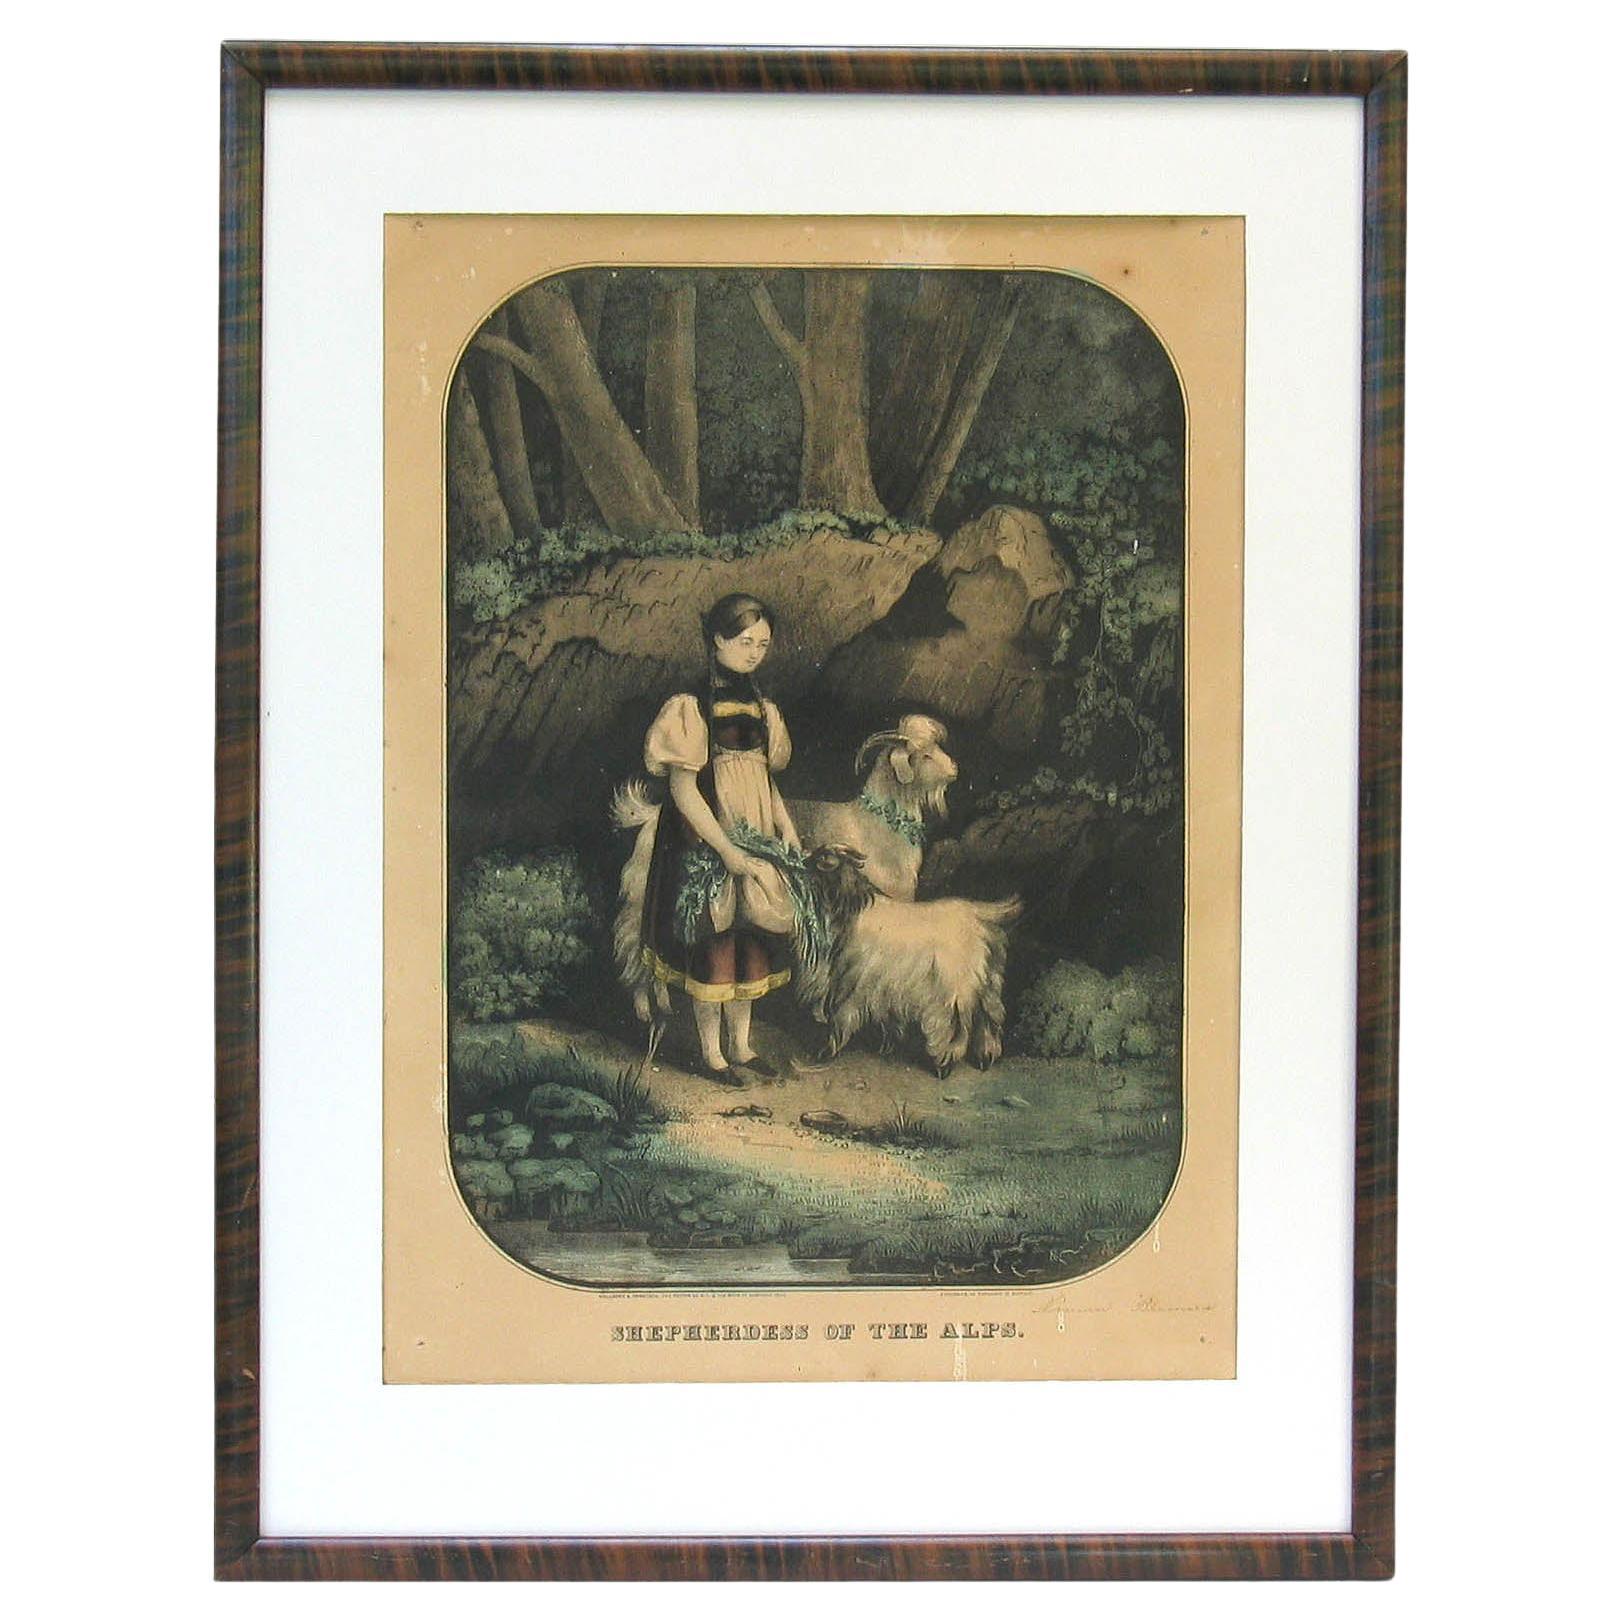 Original Kellogg & Comstock Hand-Colored Lithograph 'Shepherdess of the Alps' For Sale